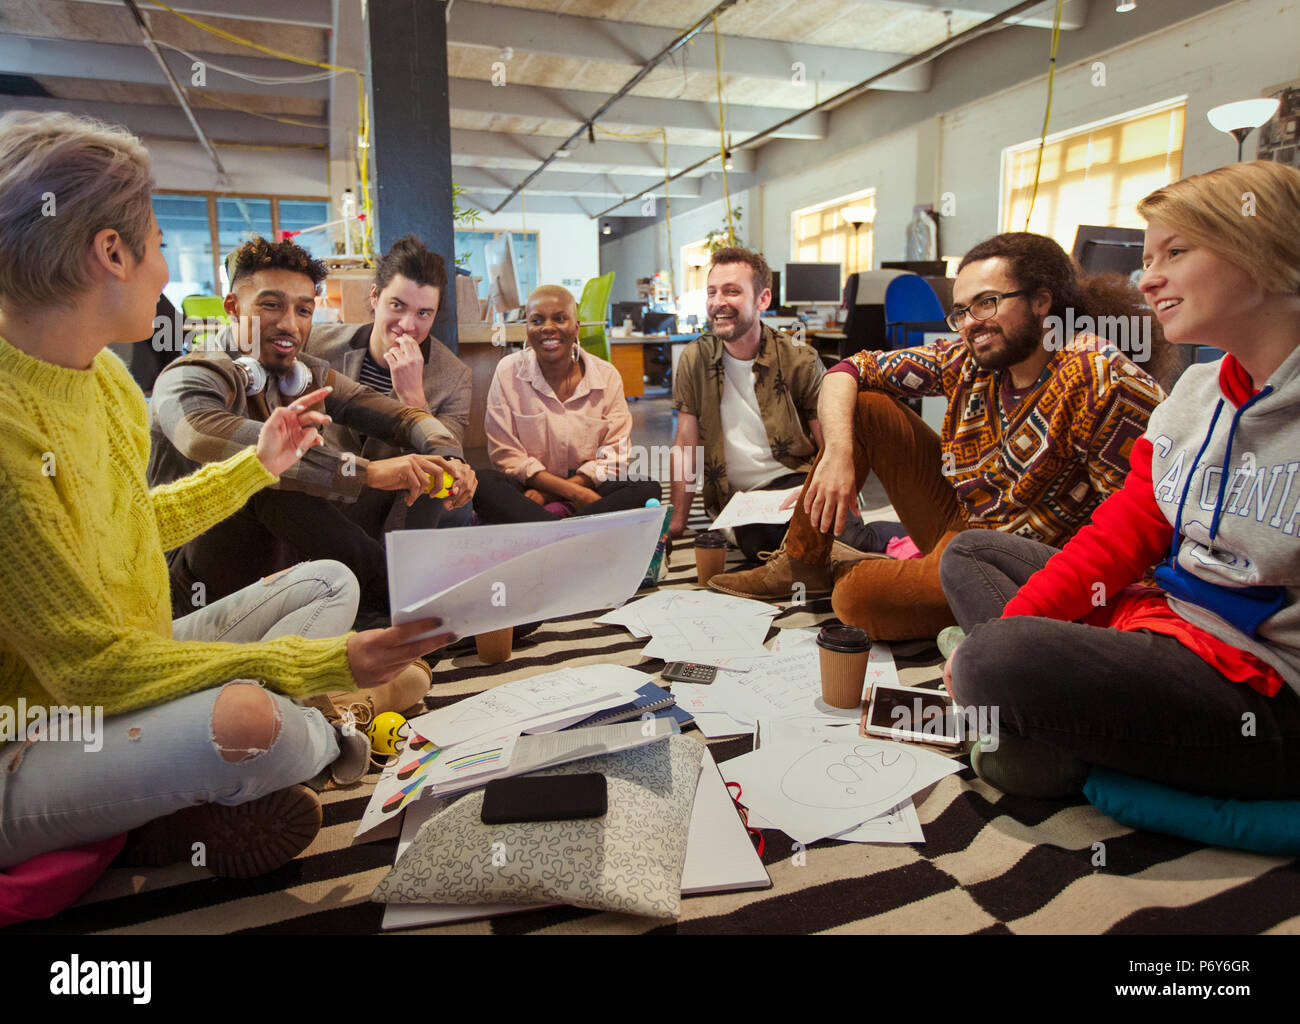 Creative business team meeting, brainstorming in circle on floor Stock Photo